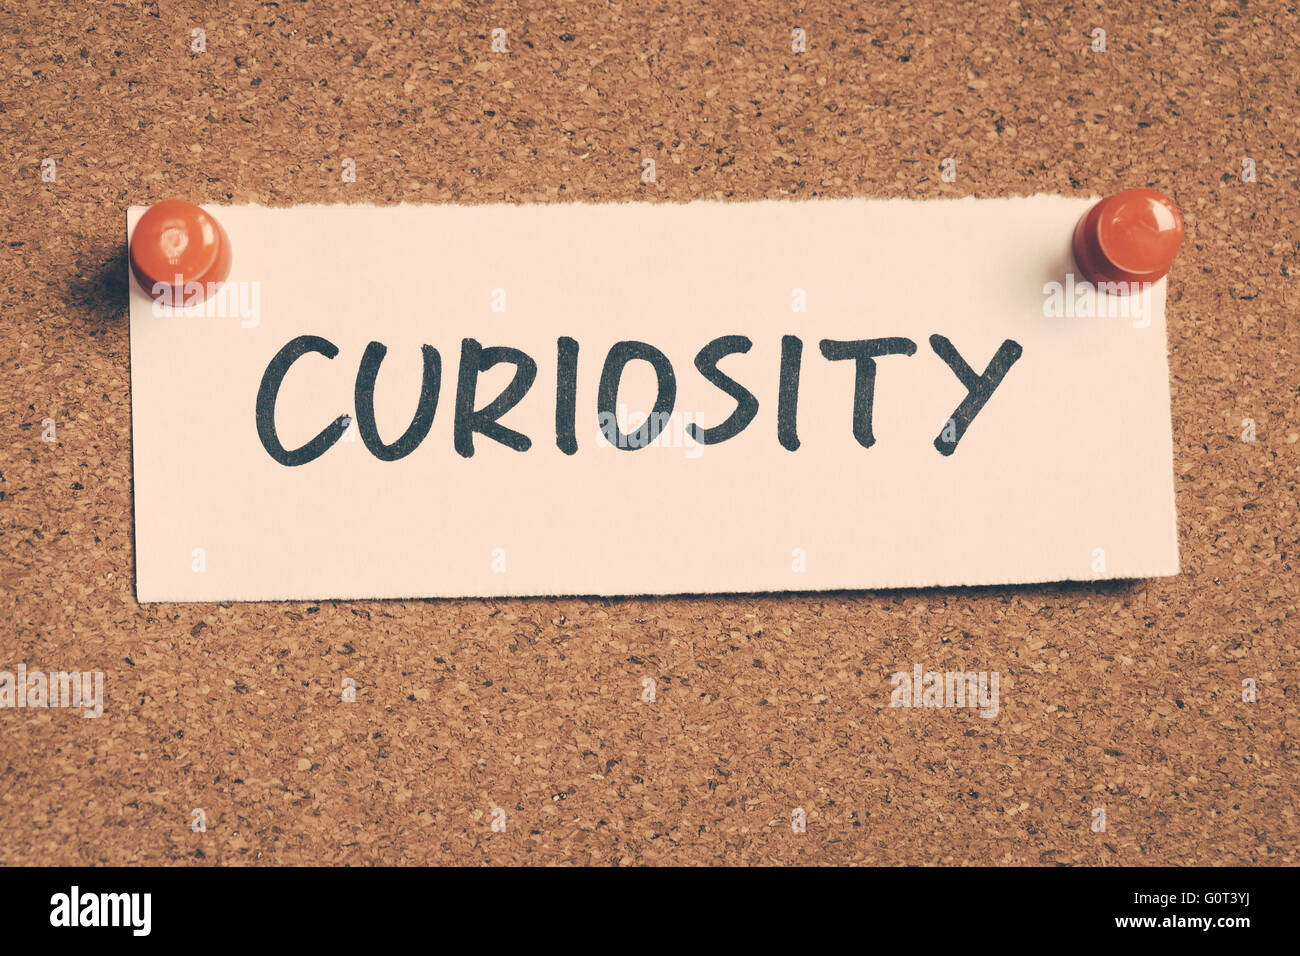 curiosity Stock Photo